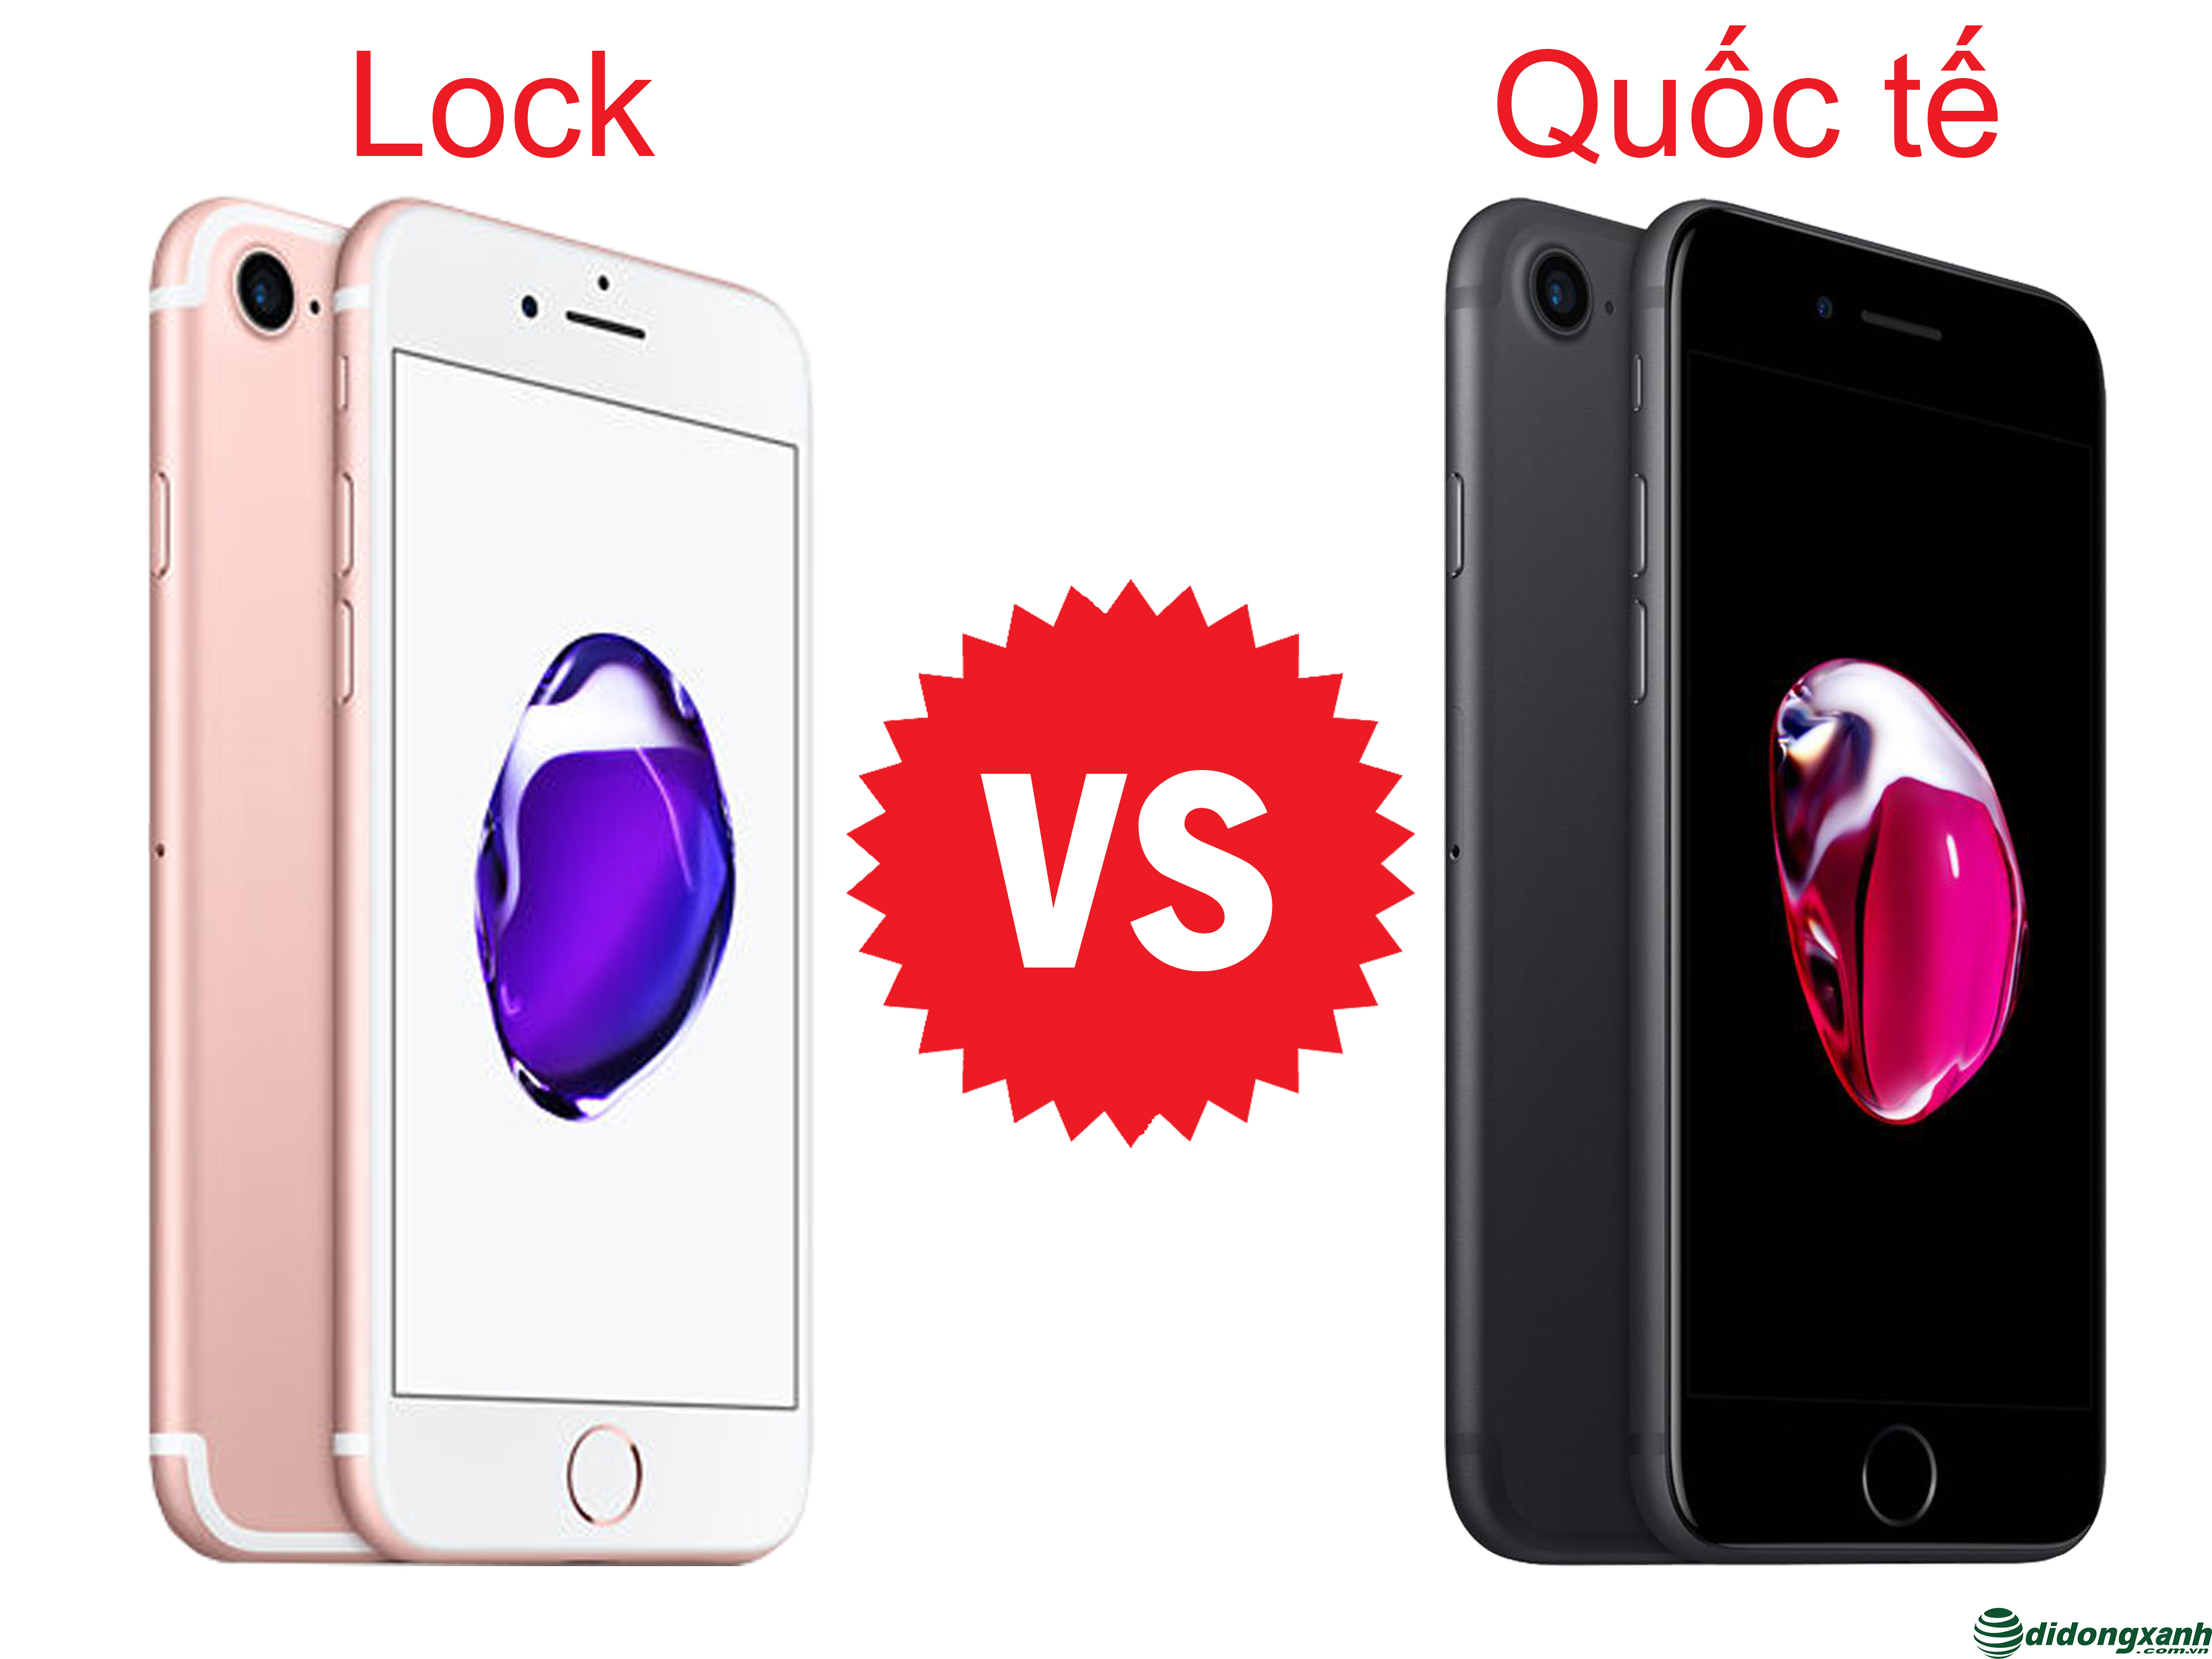 Sự khác nhau giữa iPhone quốc tế và iPhone lock